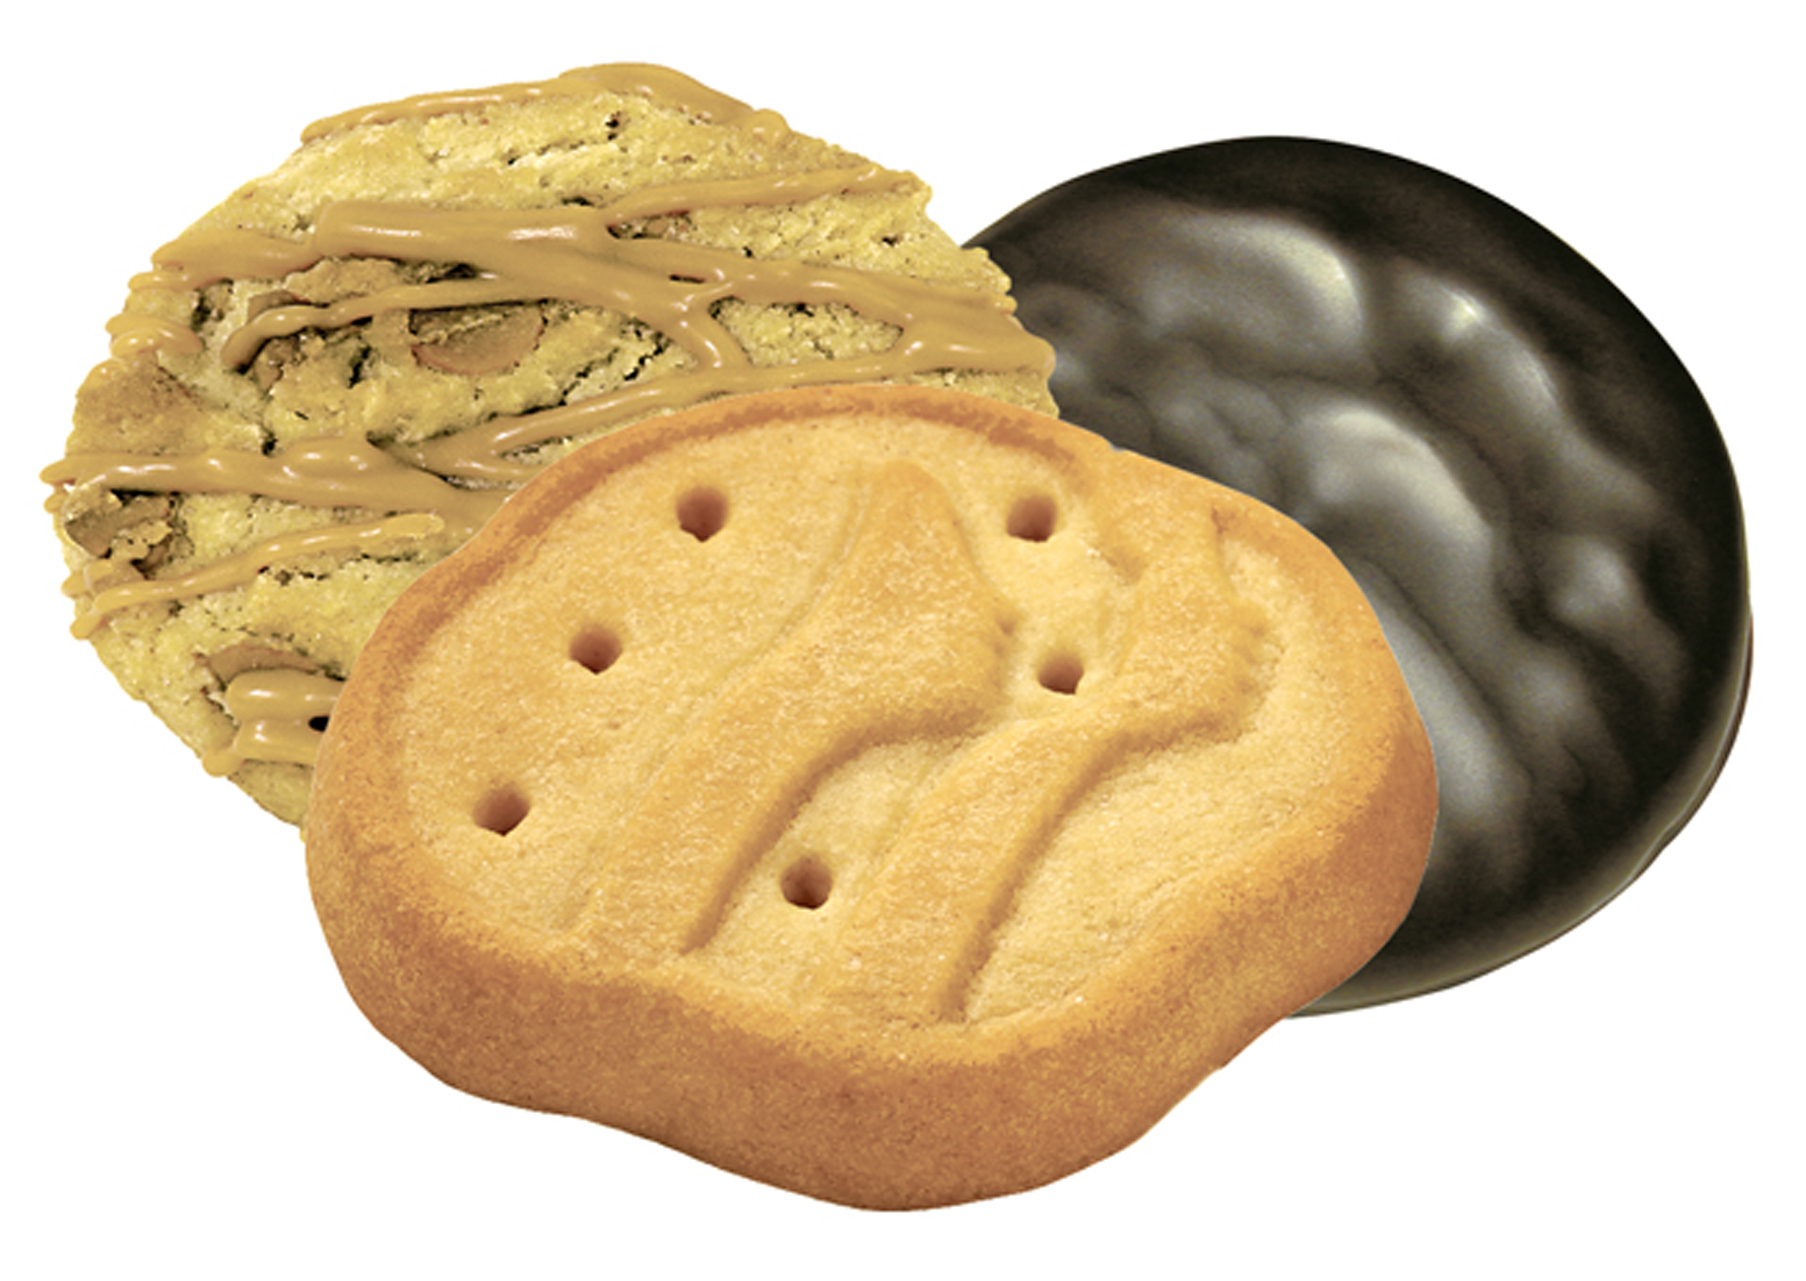 Buy Girl Scout cookies online